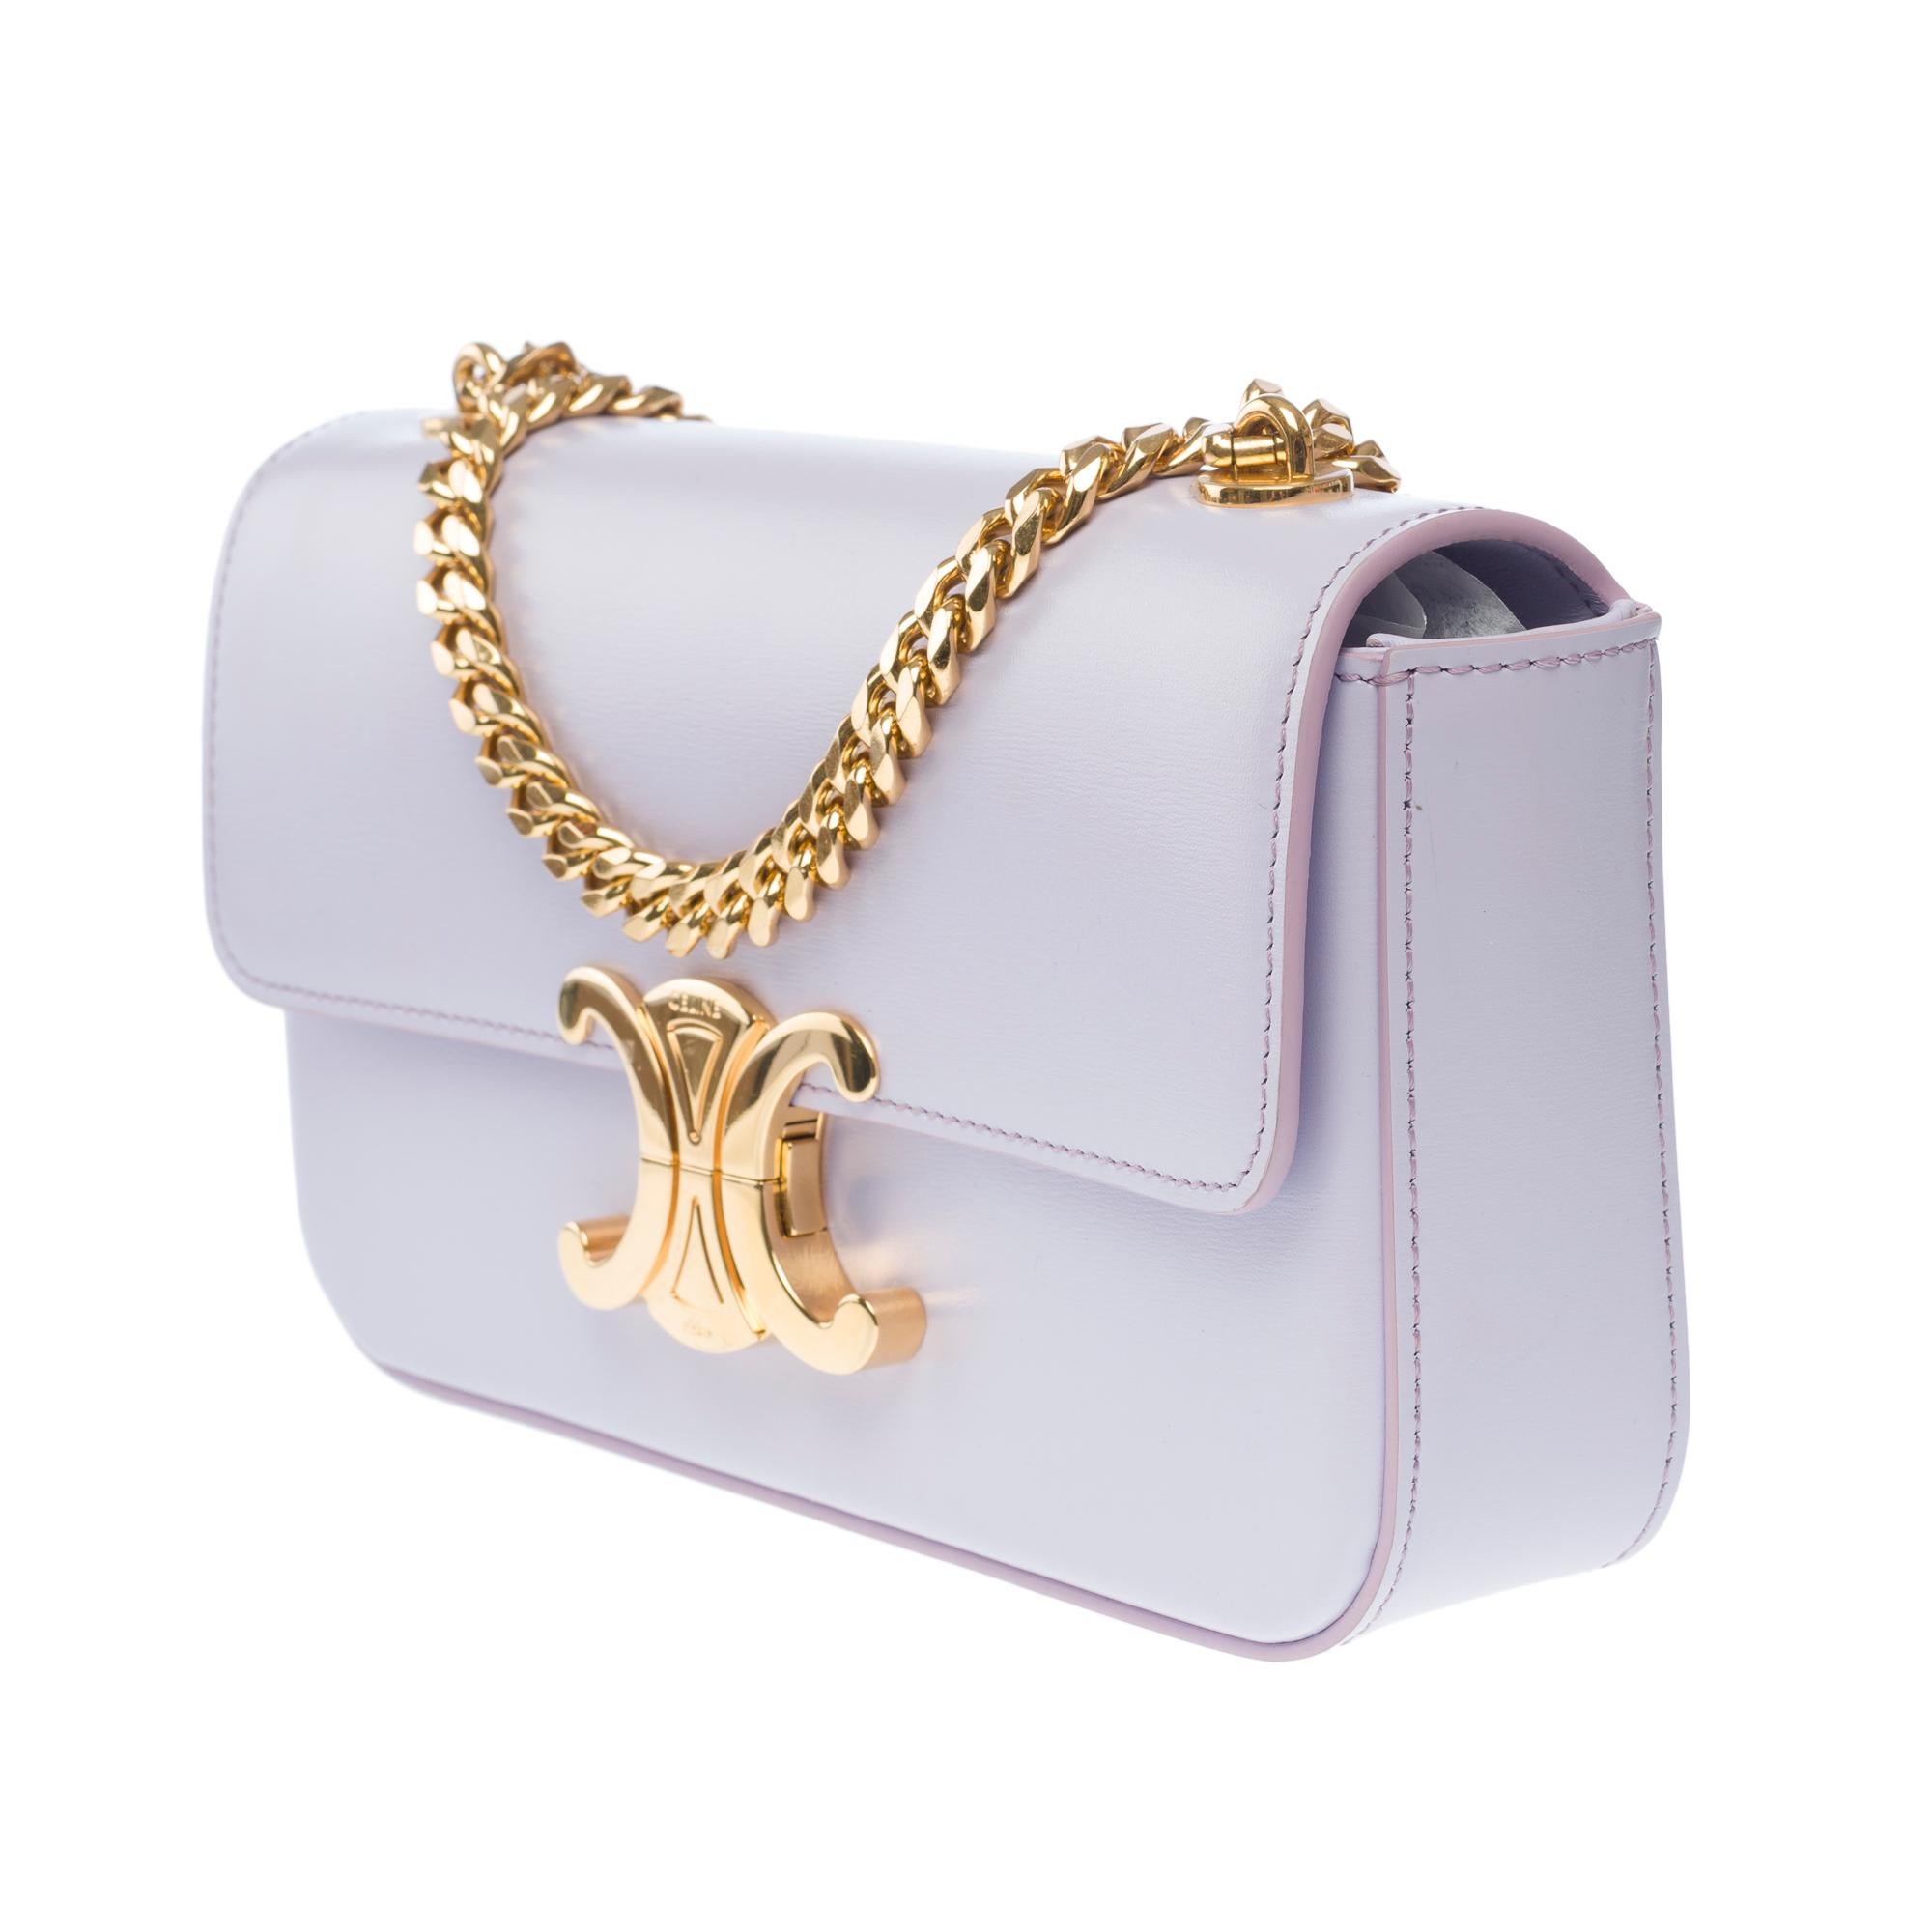 Celine Triomphe shoulder flap bag in satin lilac calf leather, GHW For Sale 1